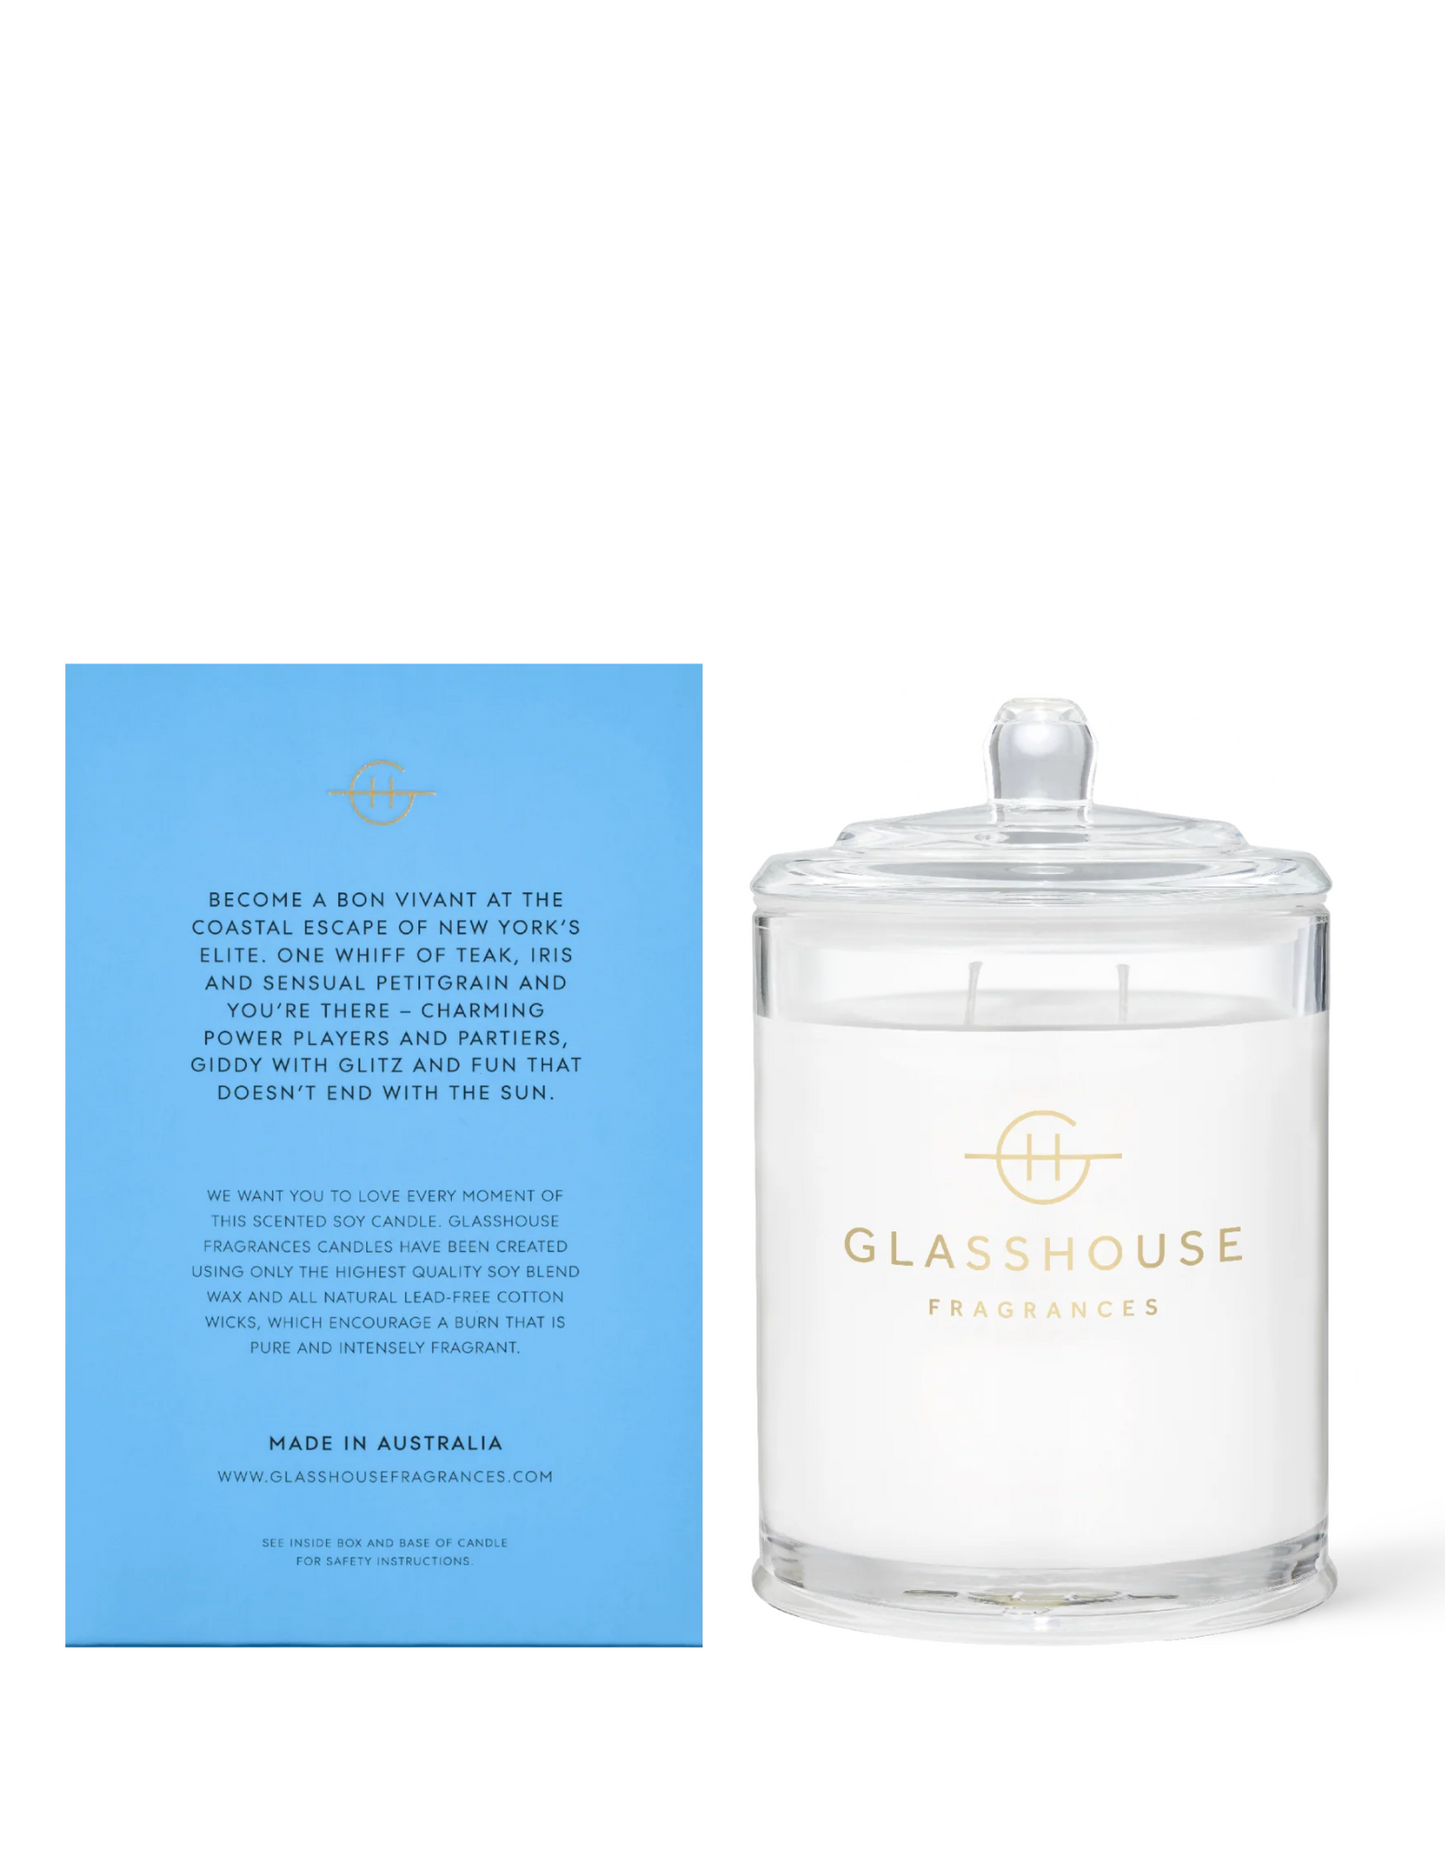 Candle 380g - The Hamptons - Glasshouse Fragrances